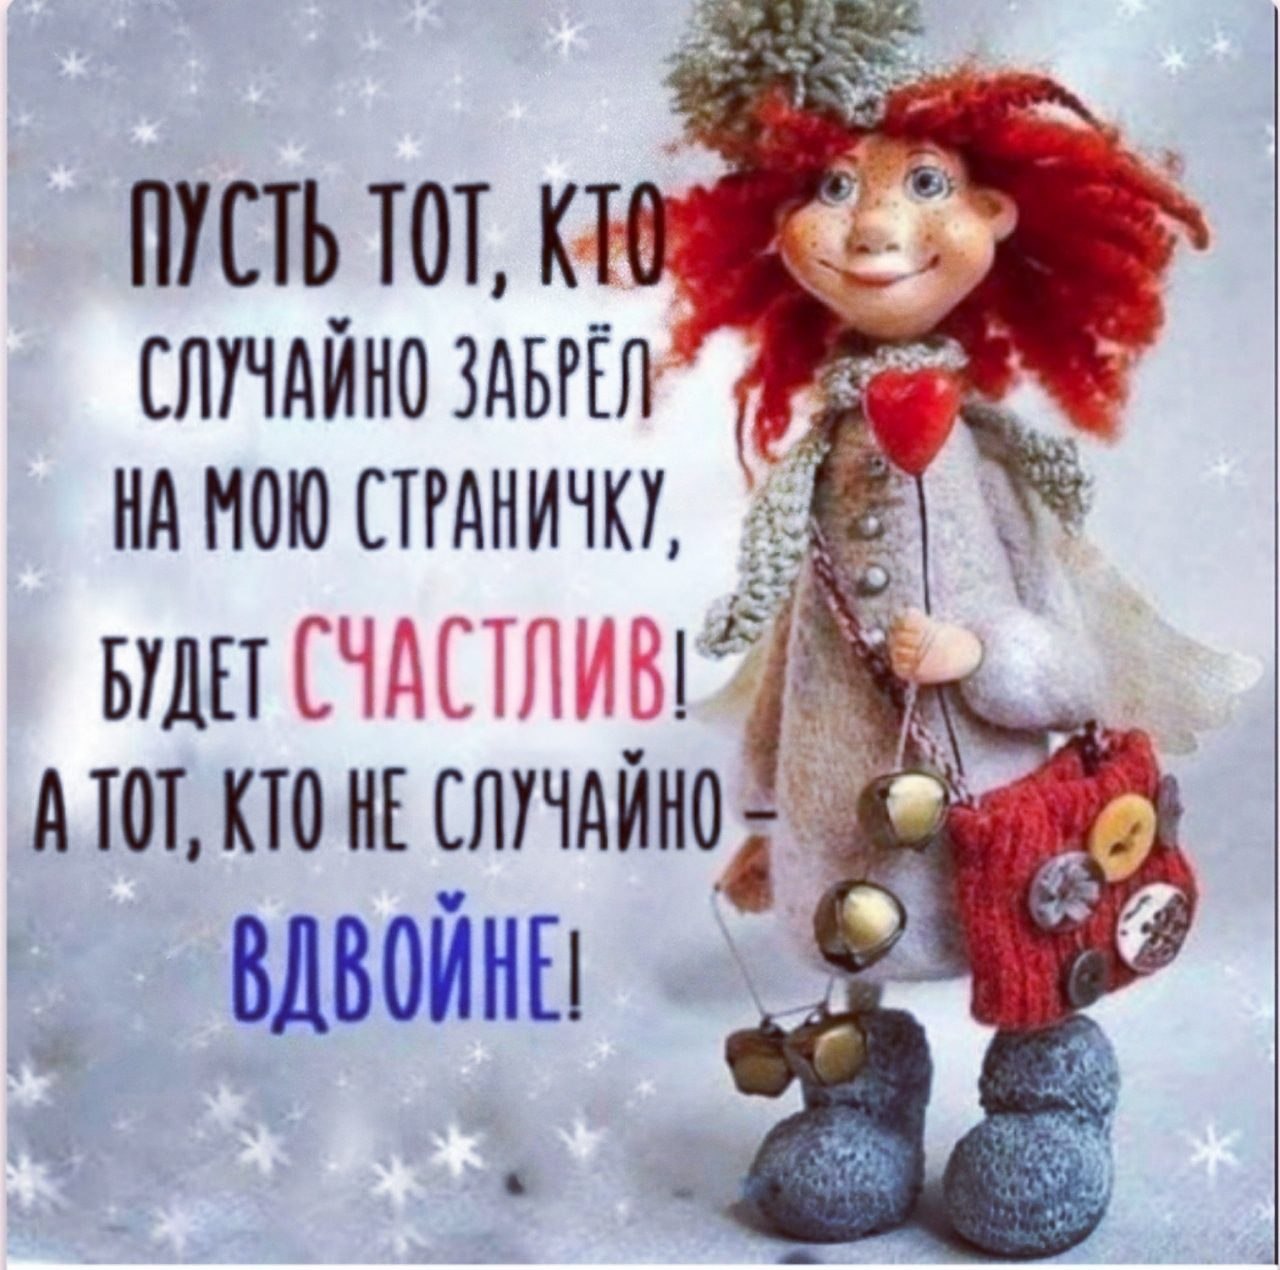 ***Victoria Viktorovna*** - 12  2019  14:36